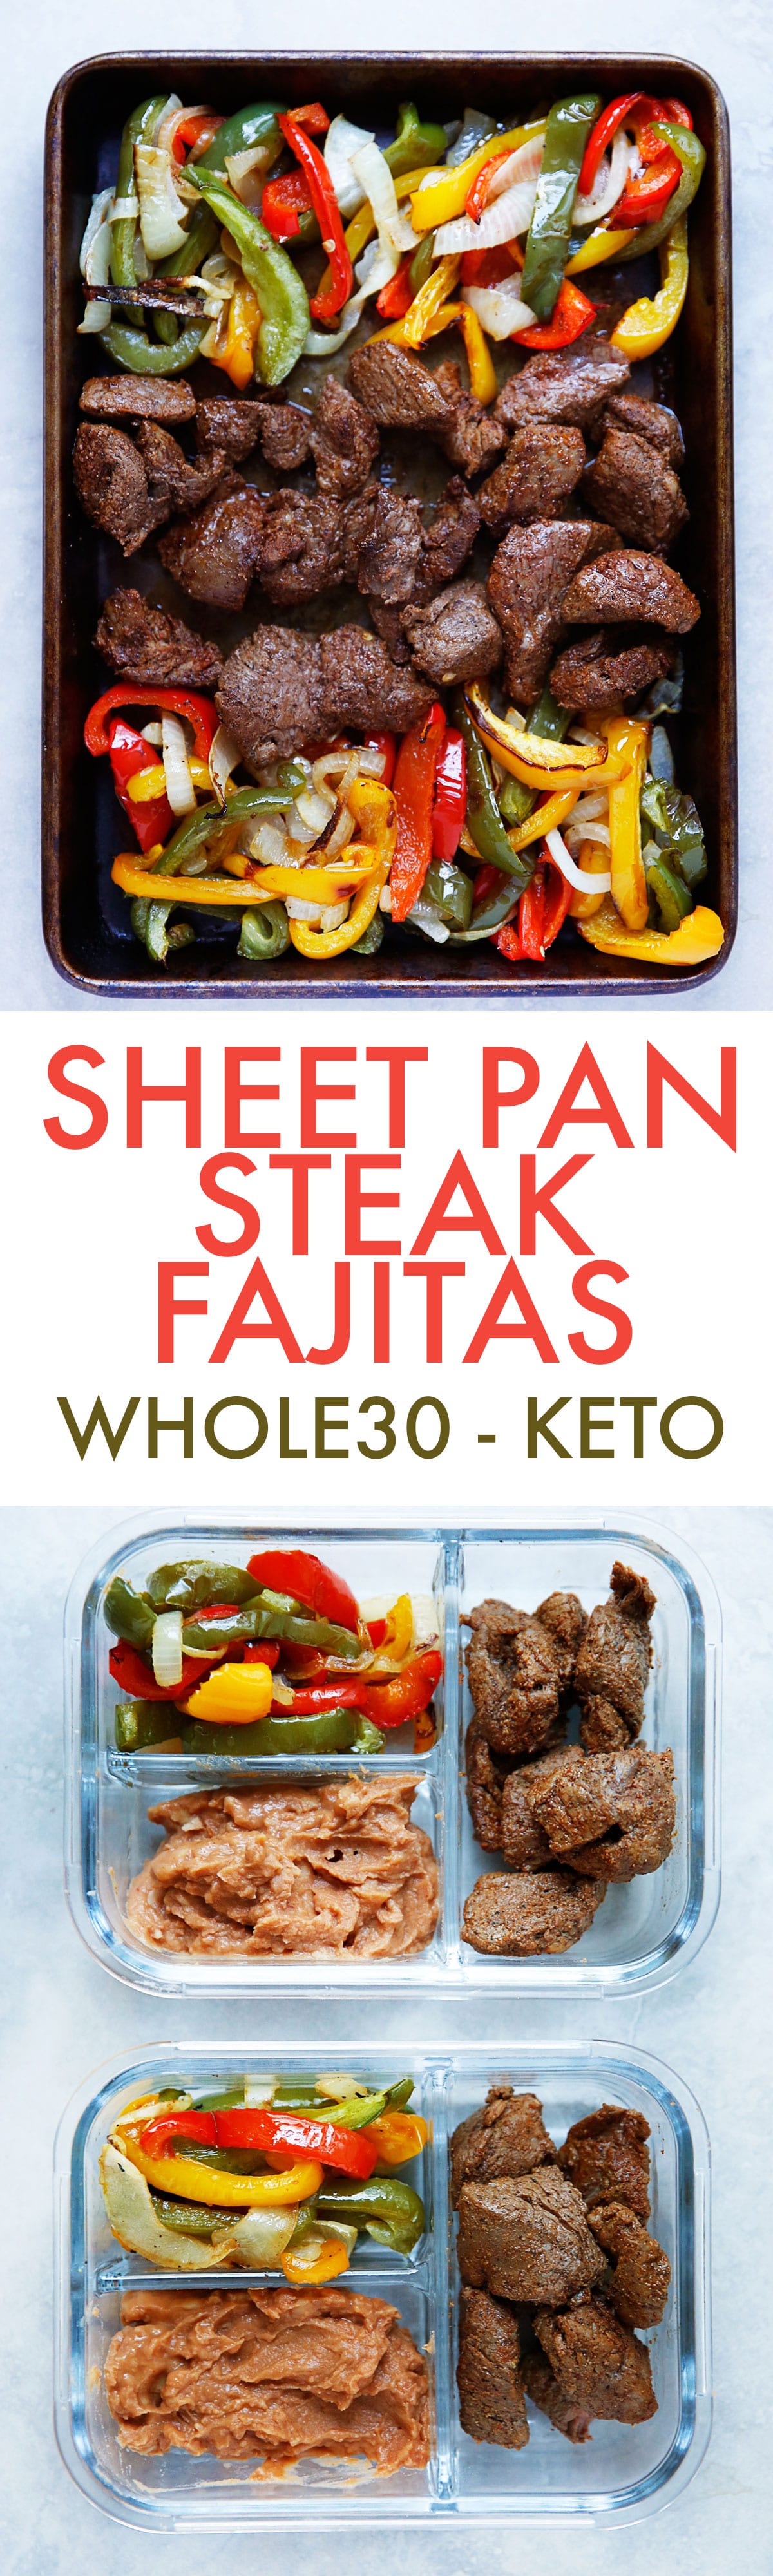 Sheet Pan Steak Fajitas